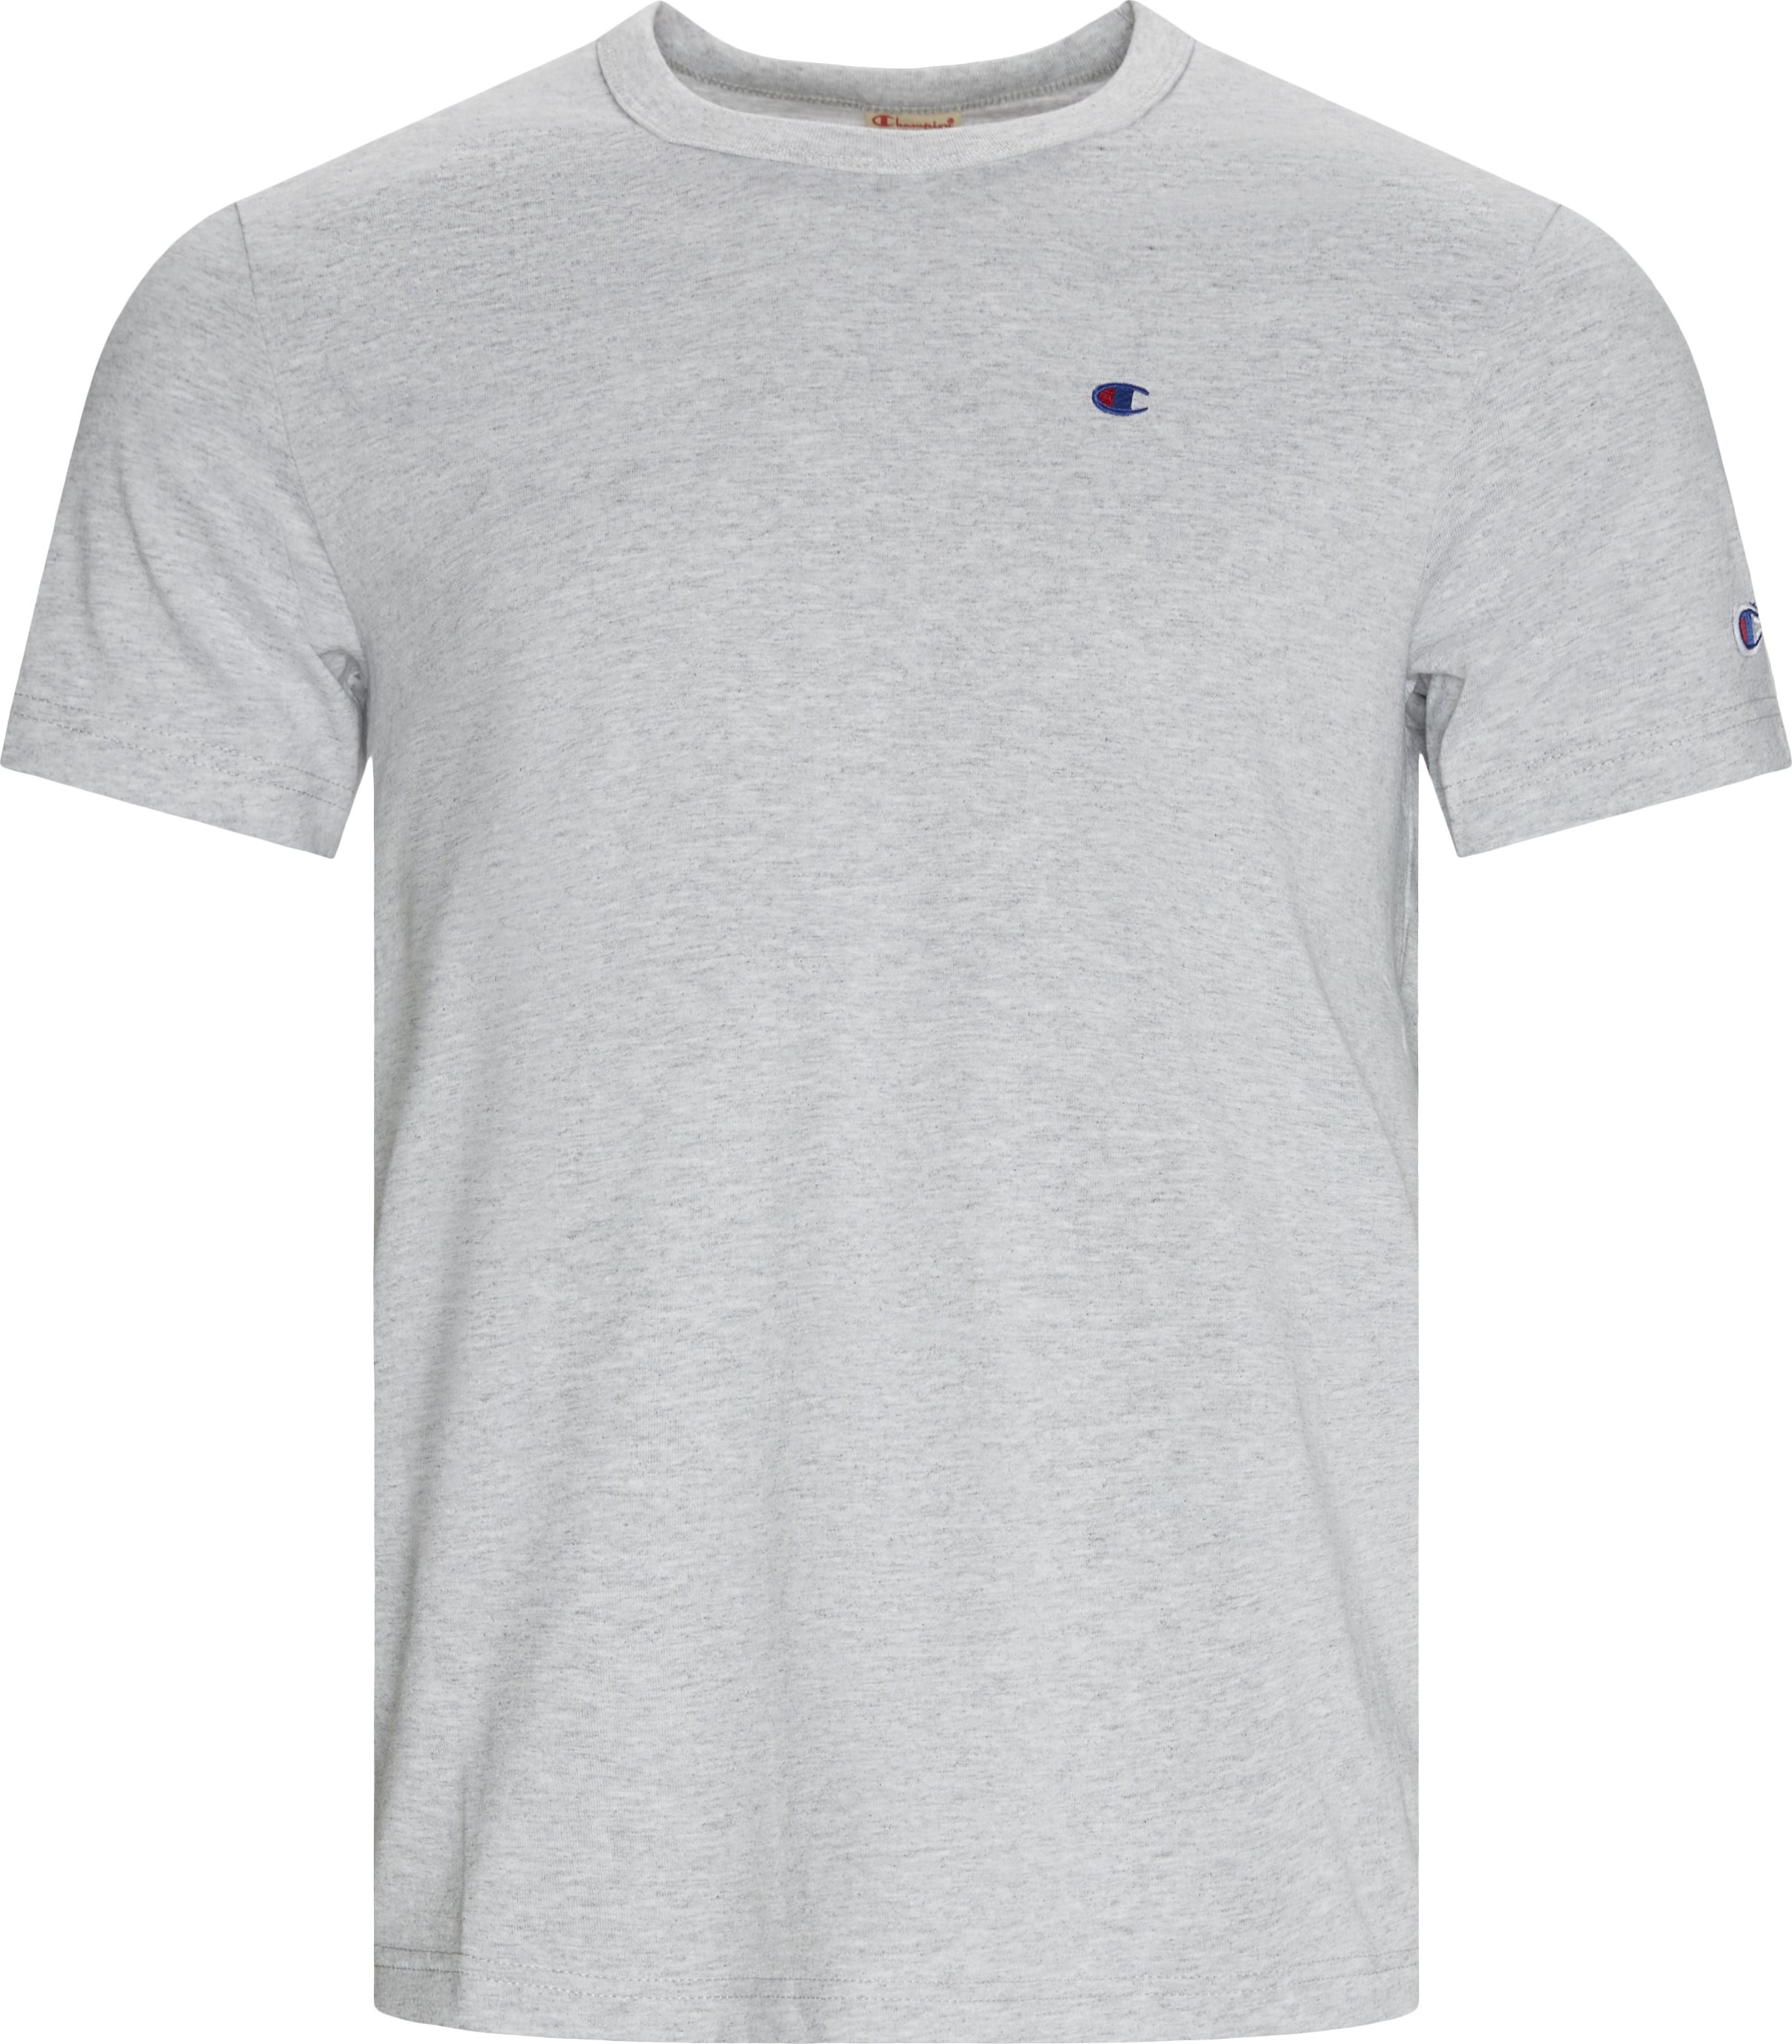 Small Chest Logo Tee - T-shirts - Regular fit - Grå